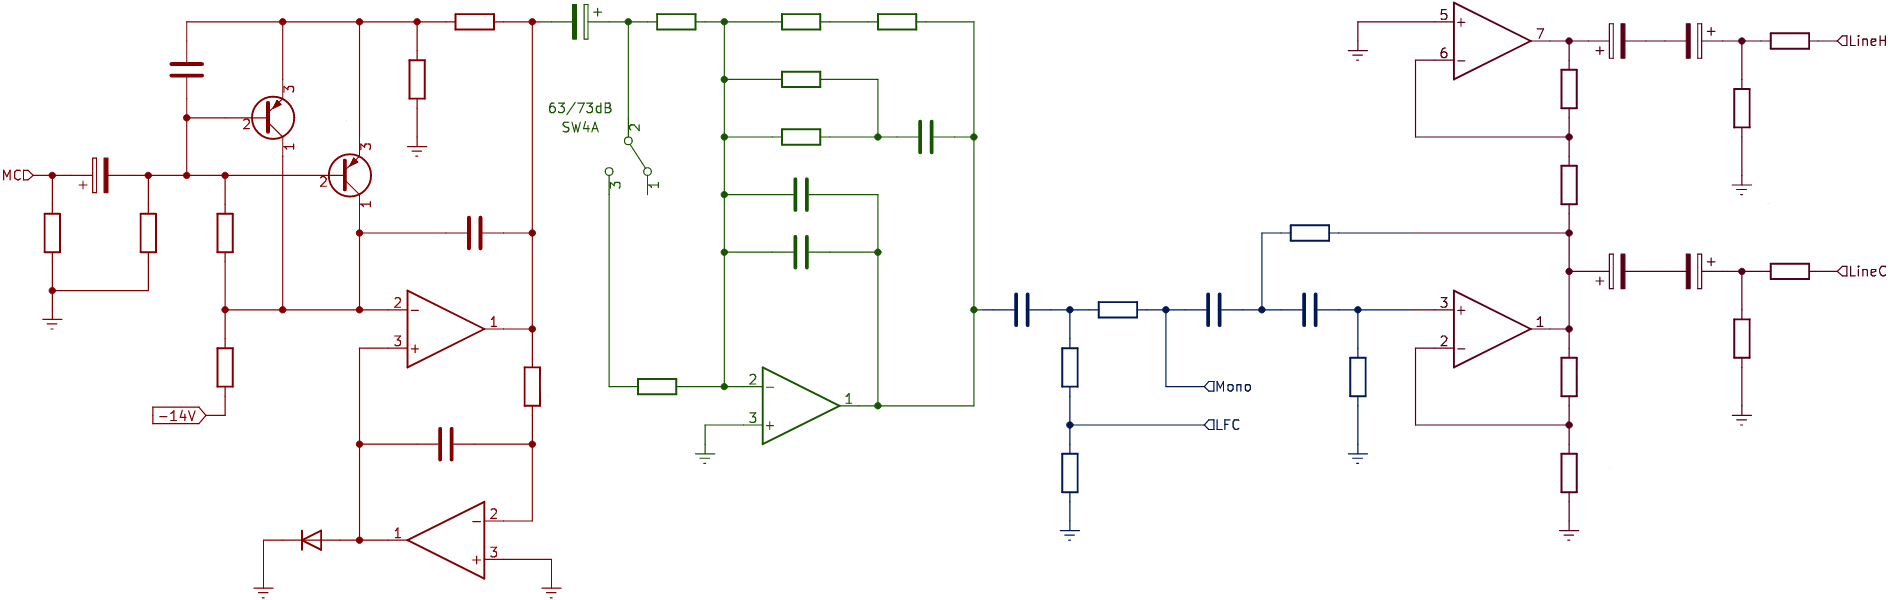 MC Pro signal path schematic